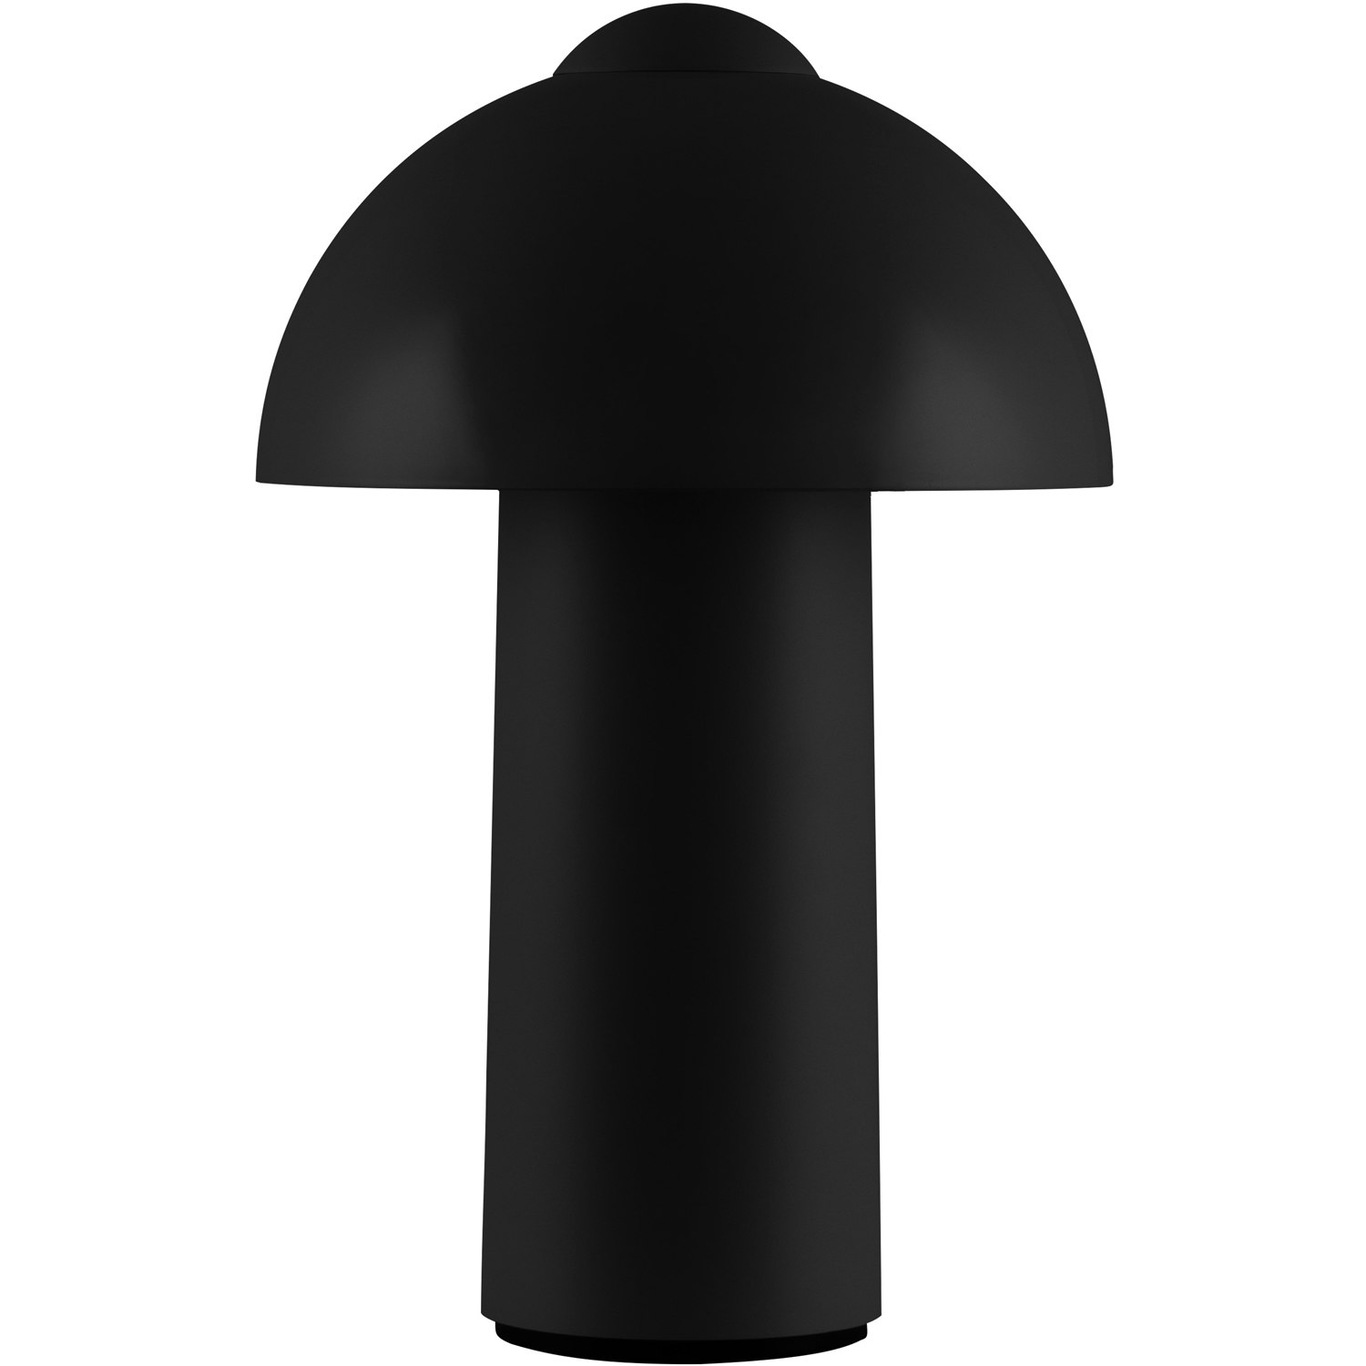 Buddy Table Lamp Portable, Black